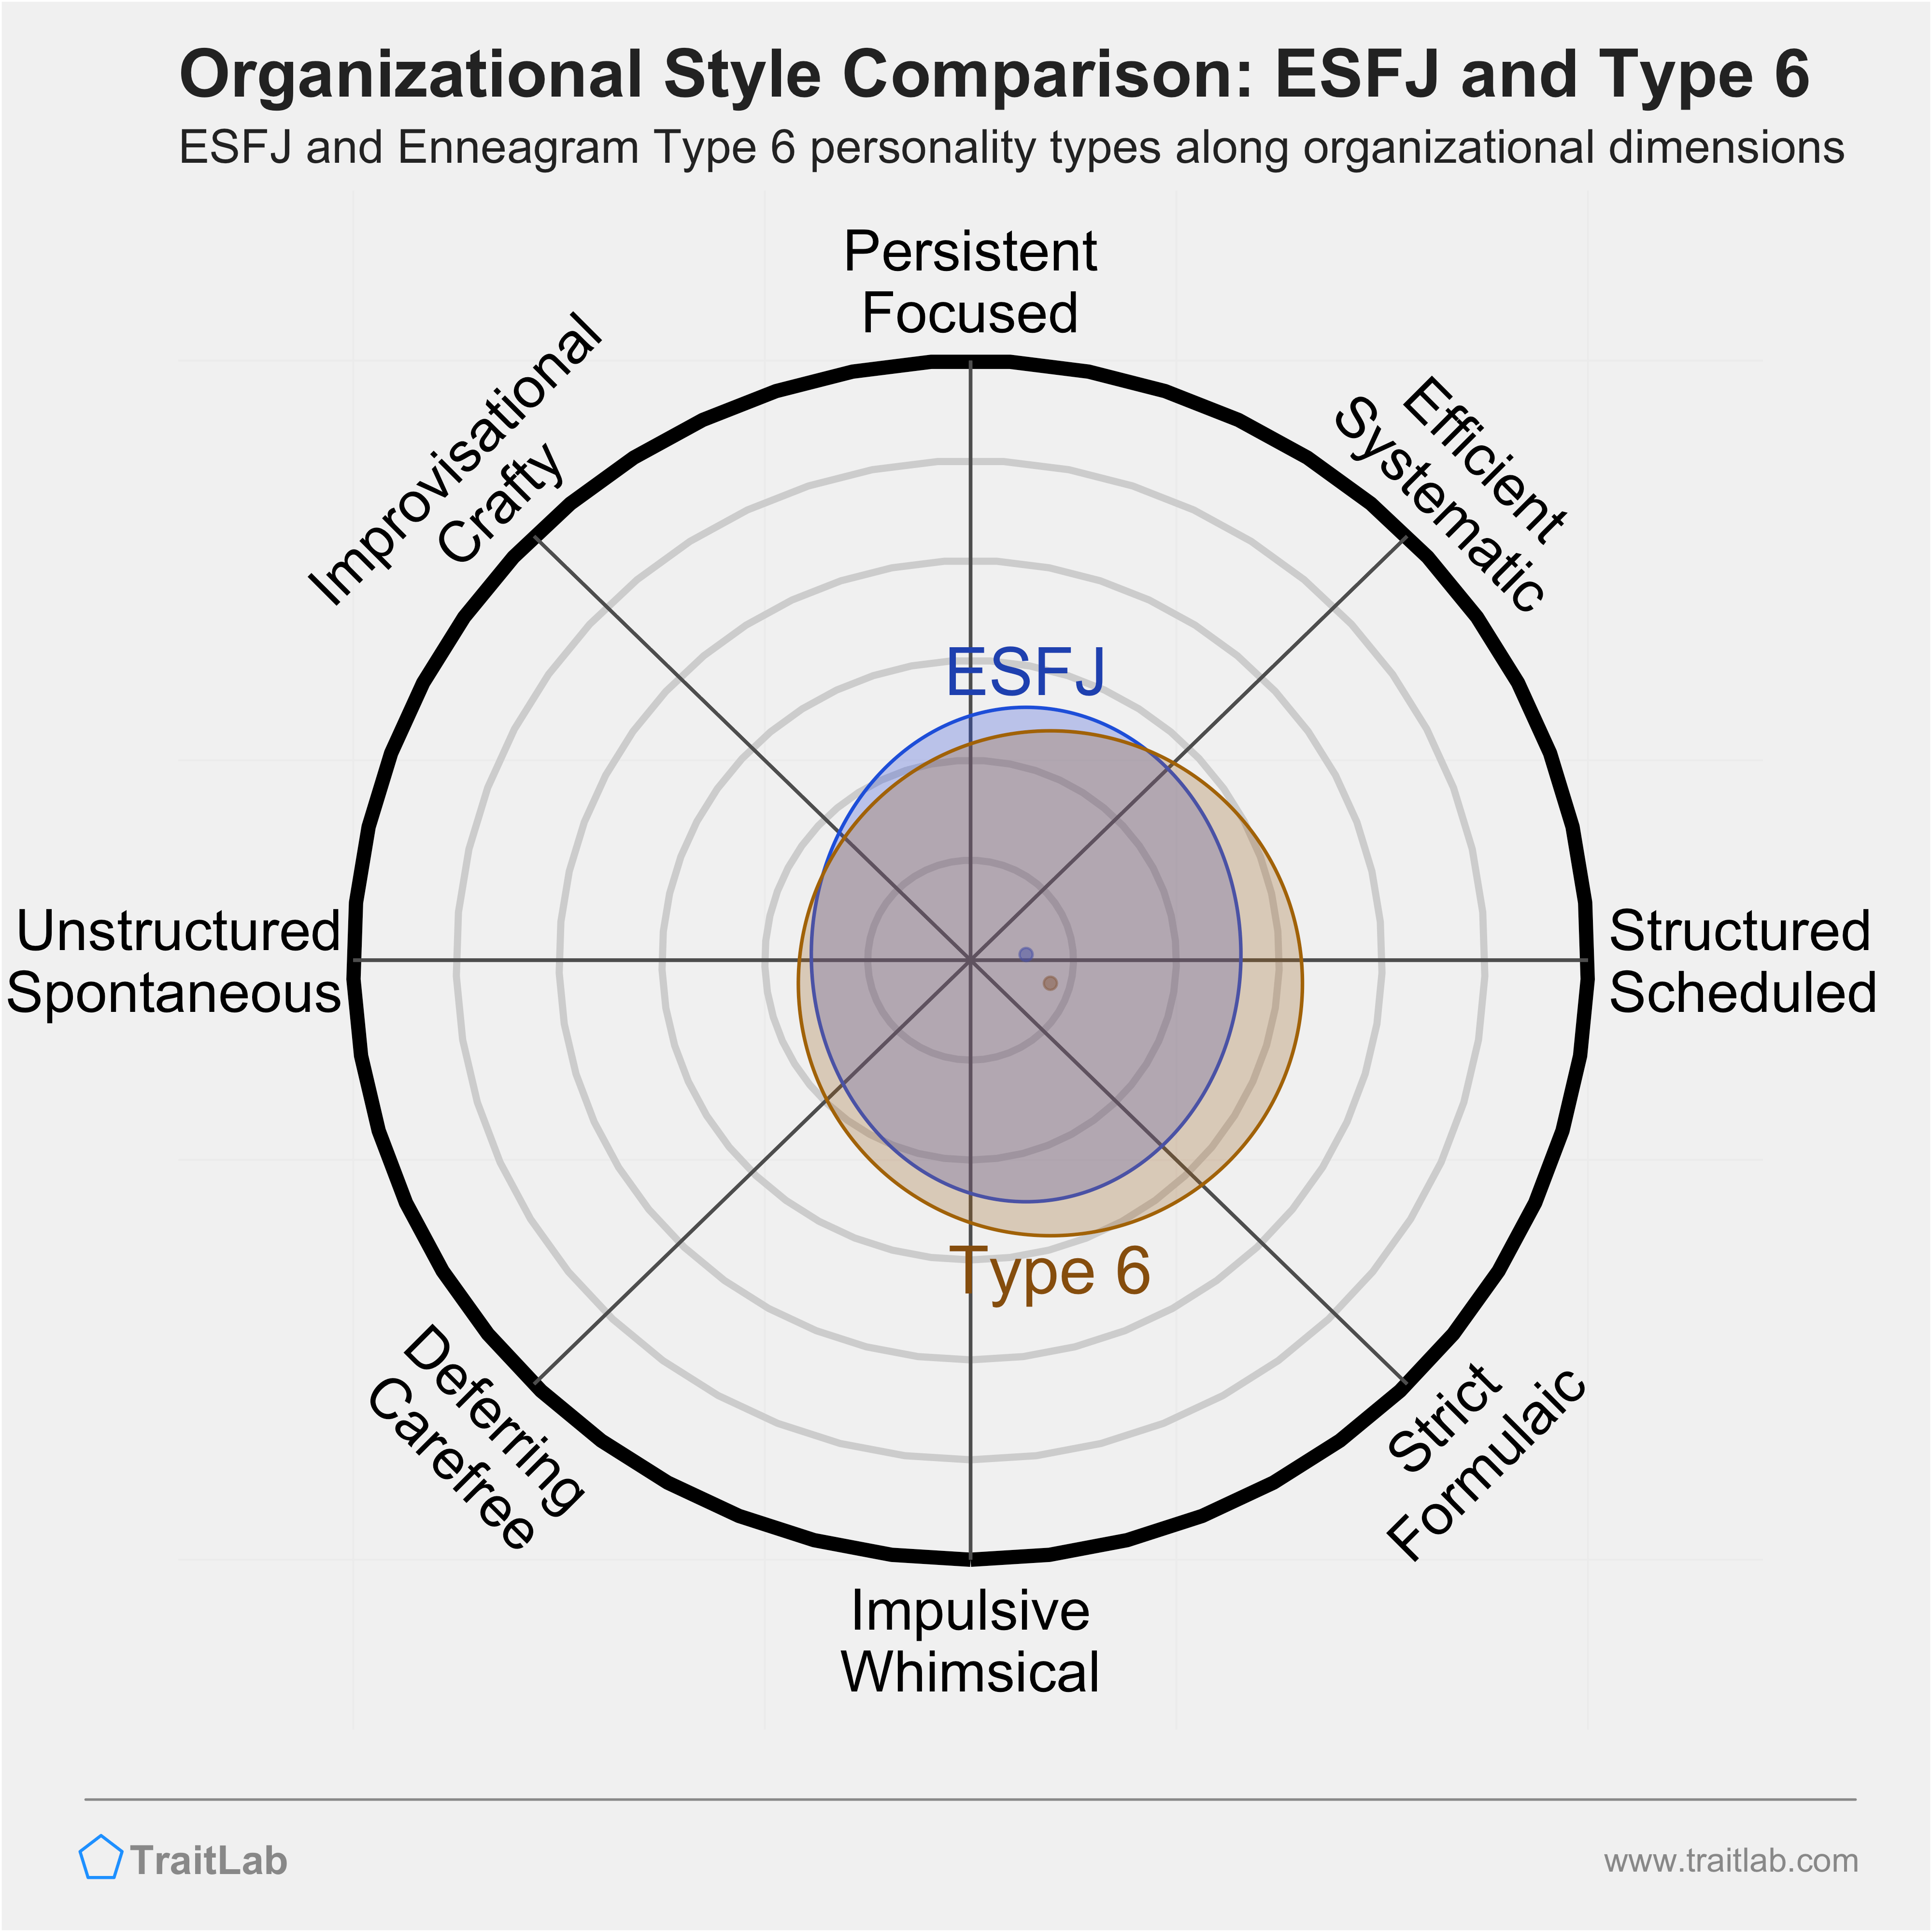 ESFJ and Type 6 comparison across organizational dimensions